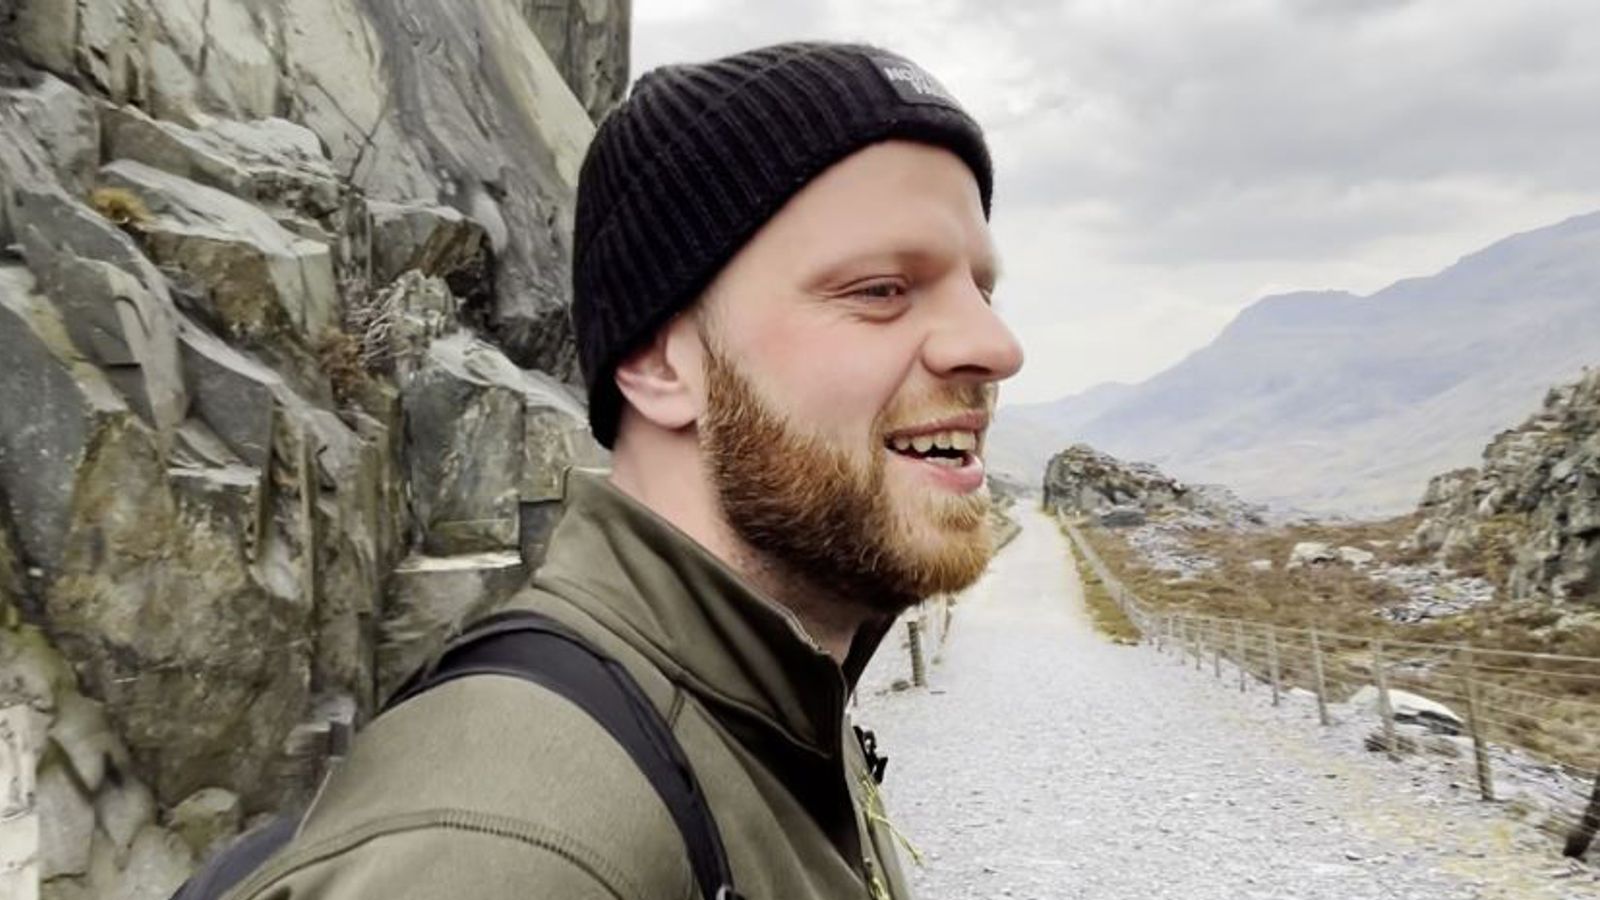 Aidan Roche: Body of British hiker found in Switzerland, family confirms